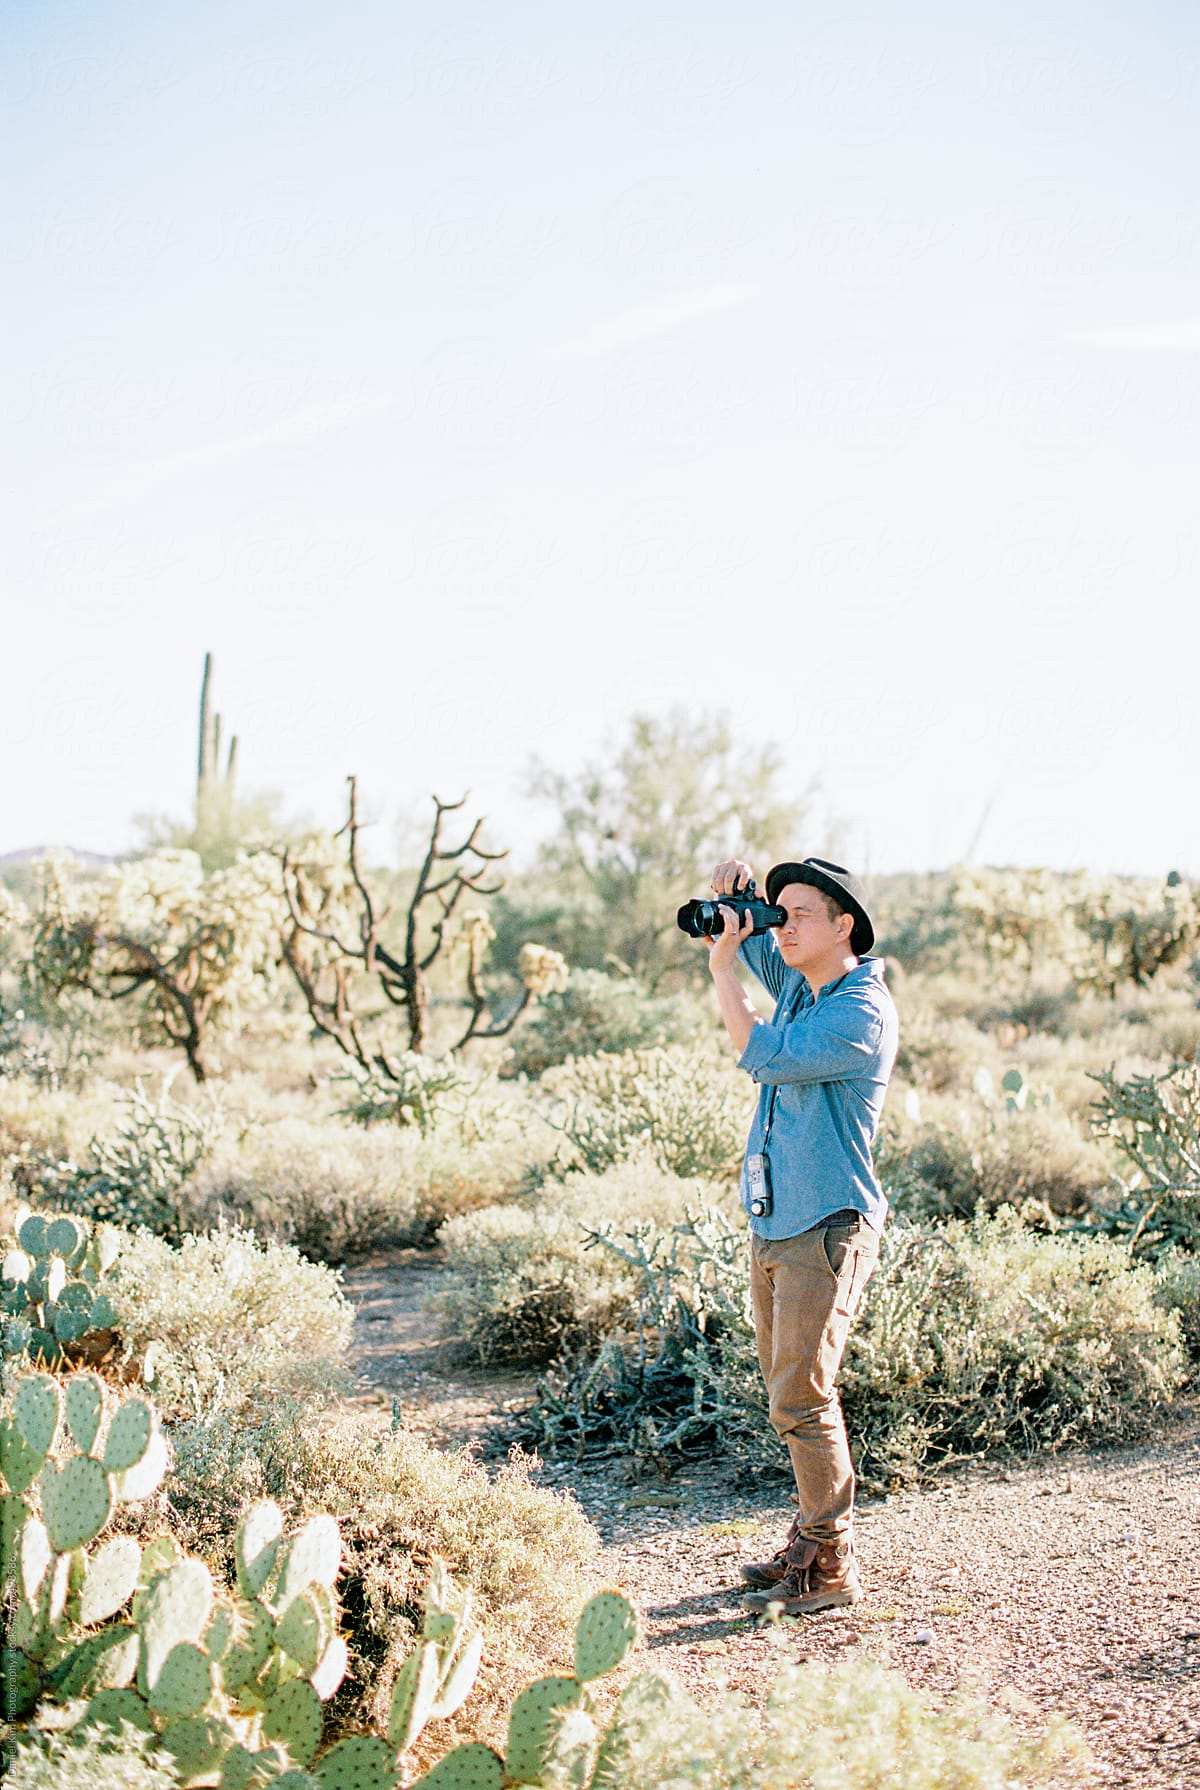 Man taking picture in desert